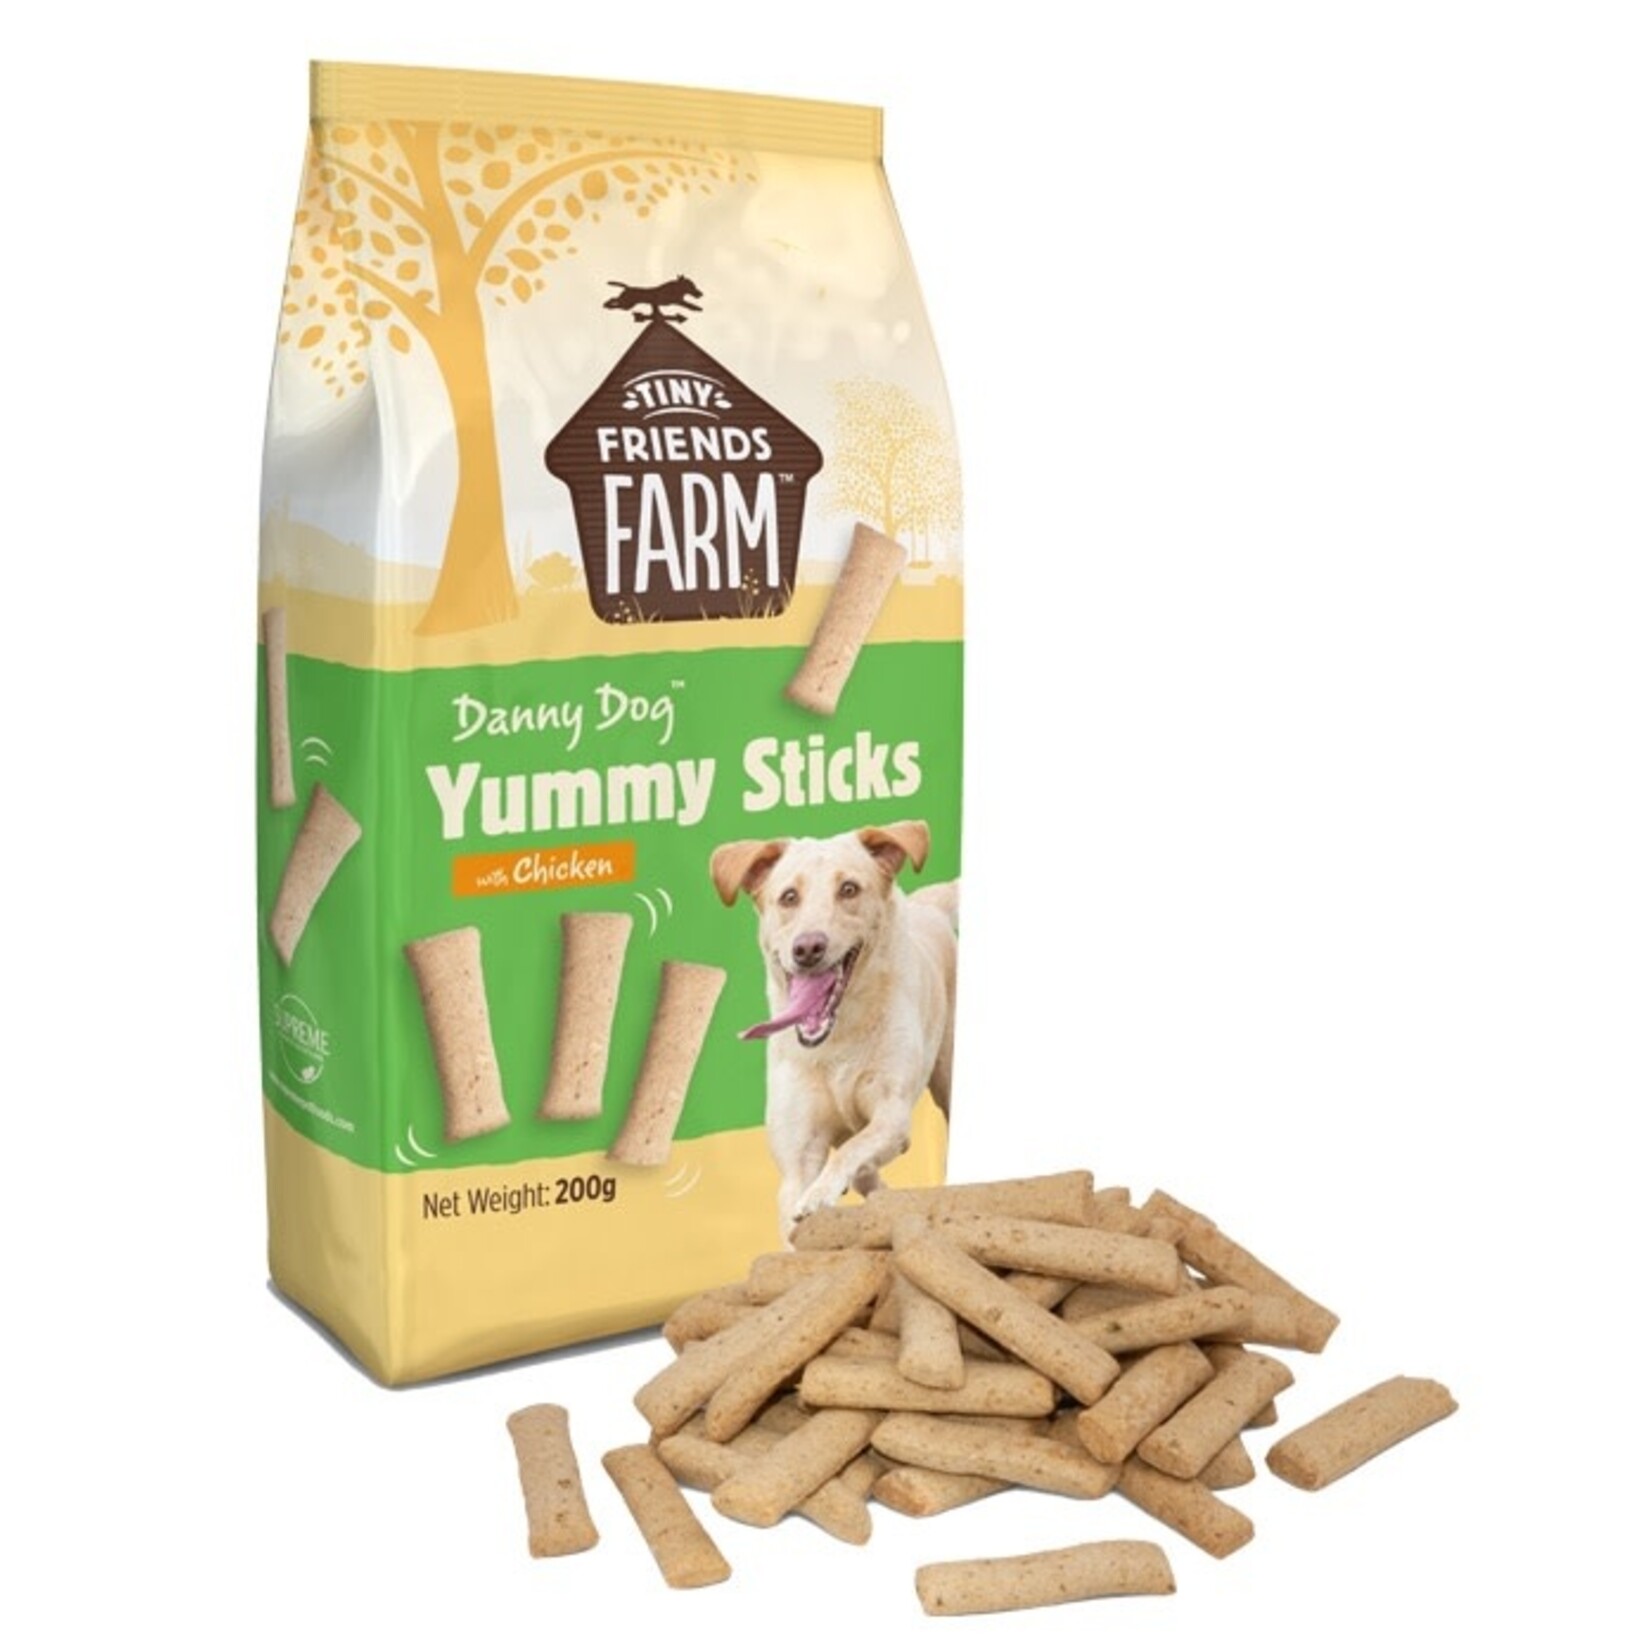 Supreme Tiny Friends Farm Danny Dog Yummy Sticks Chicken Treats, 200g